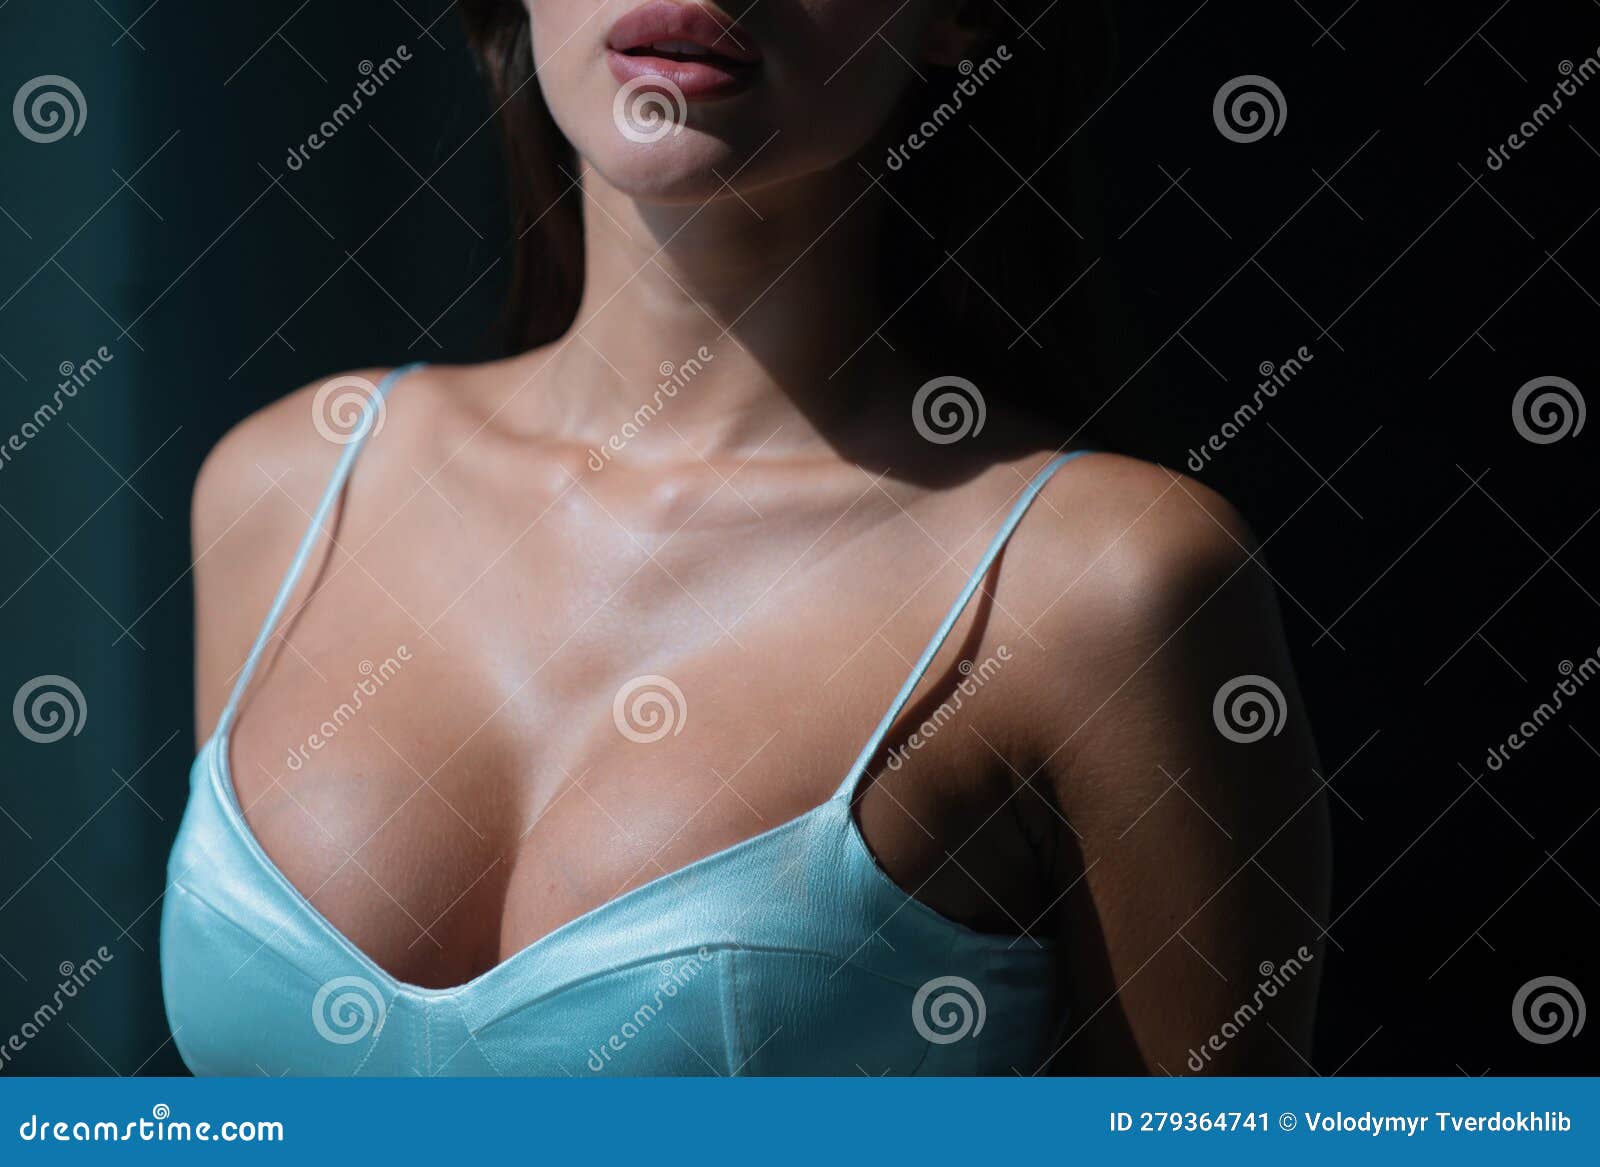 ashley hillock add photo girls boobs close up